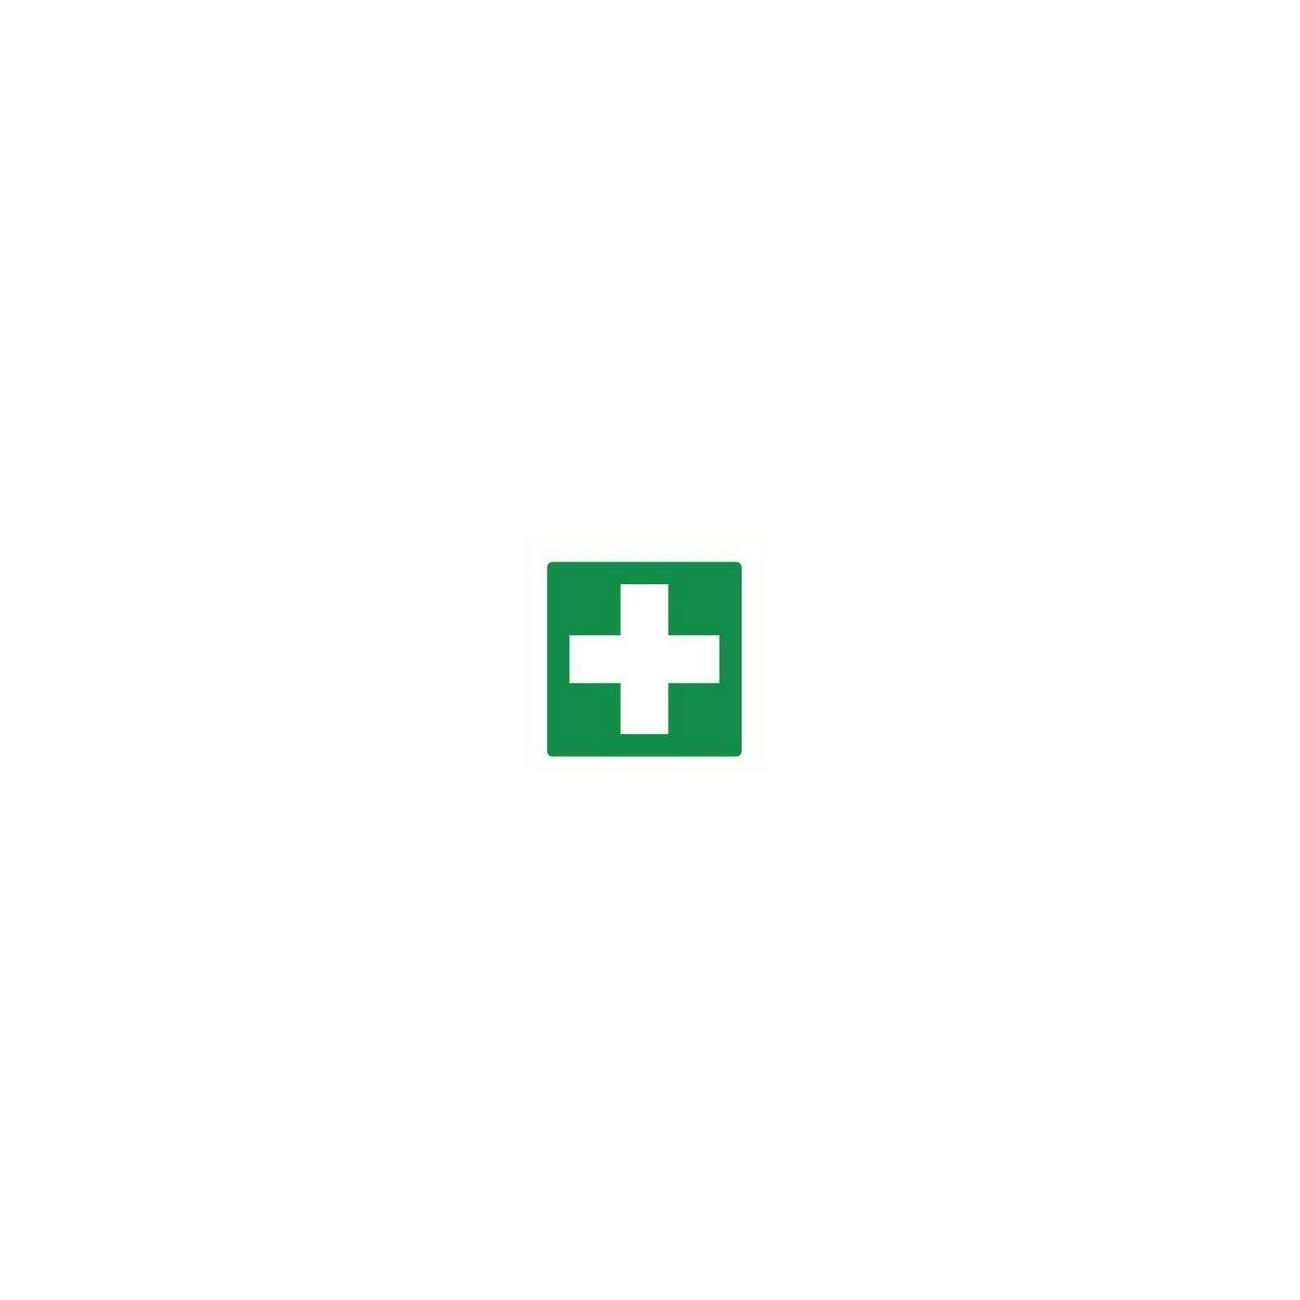 Productie capsule kleding Pictogram sticker EHBO kruis groen/wit 150x150mm | ESE International